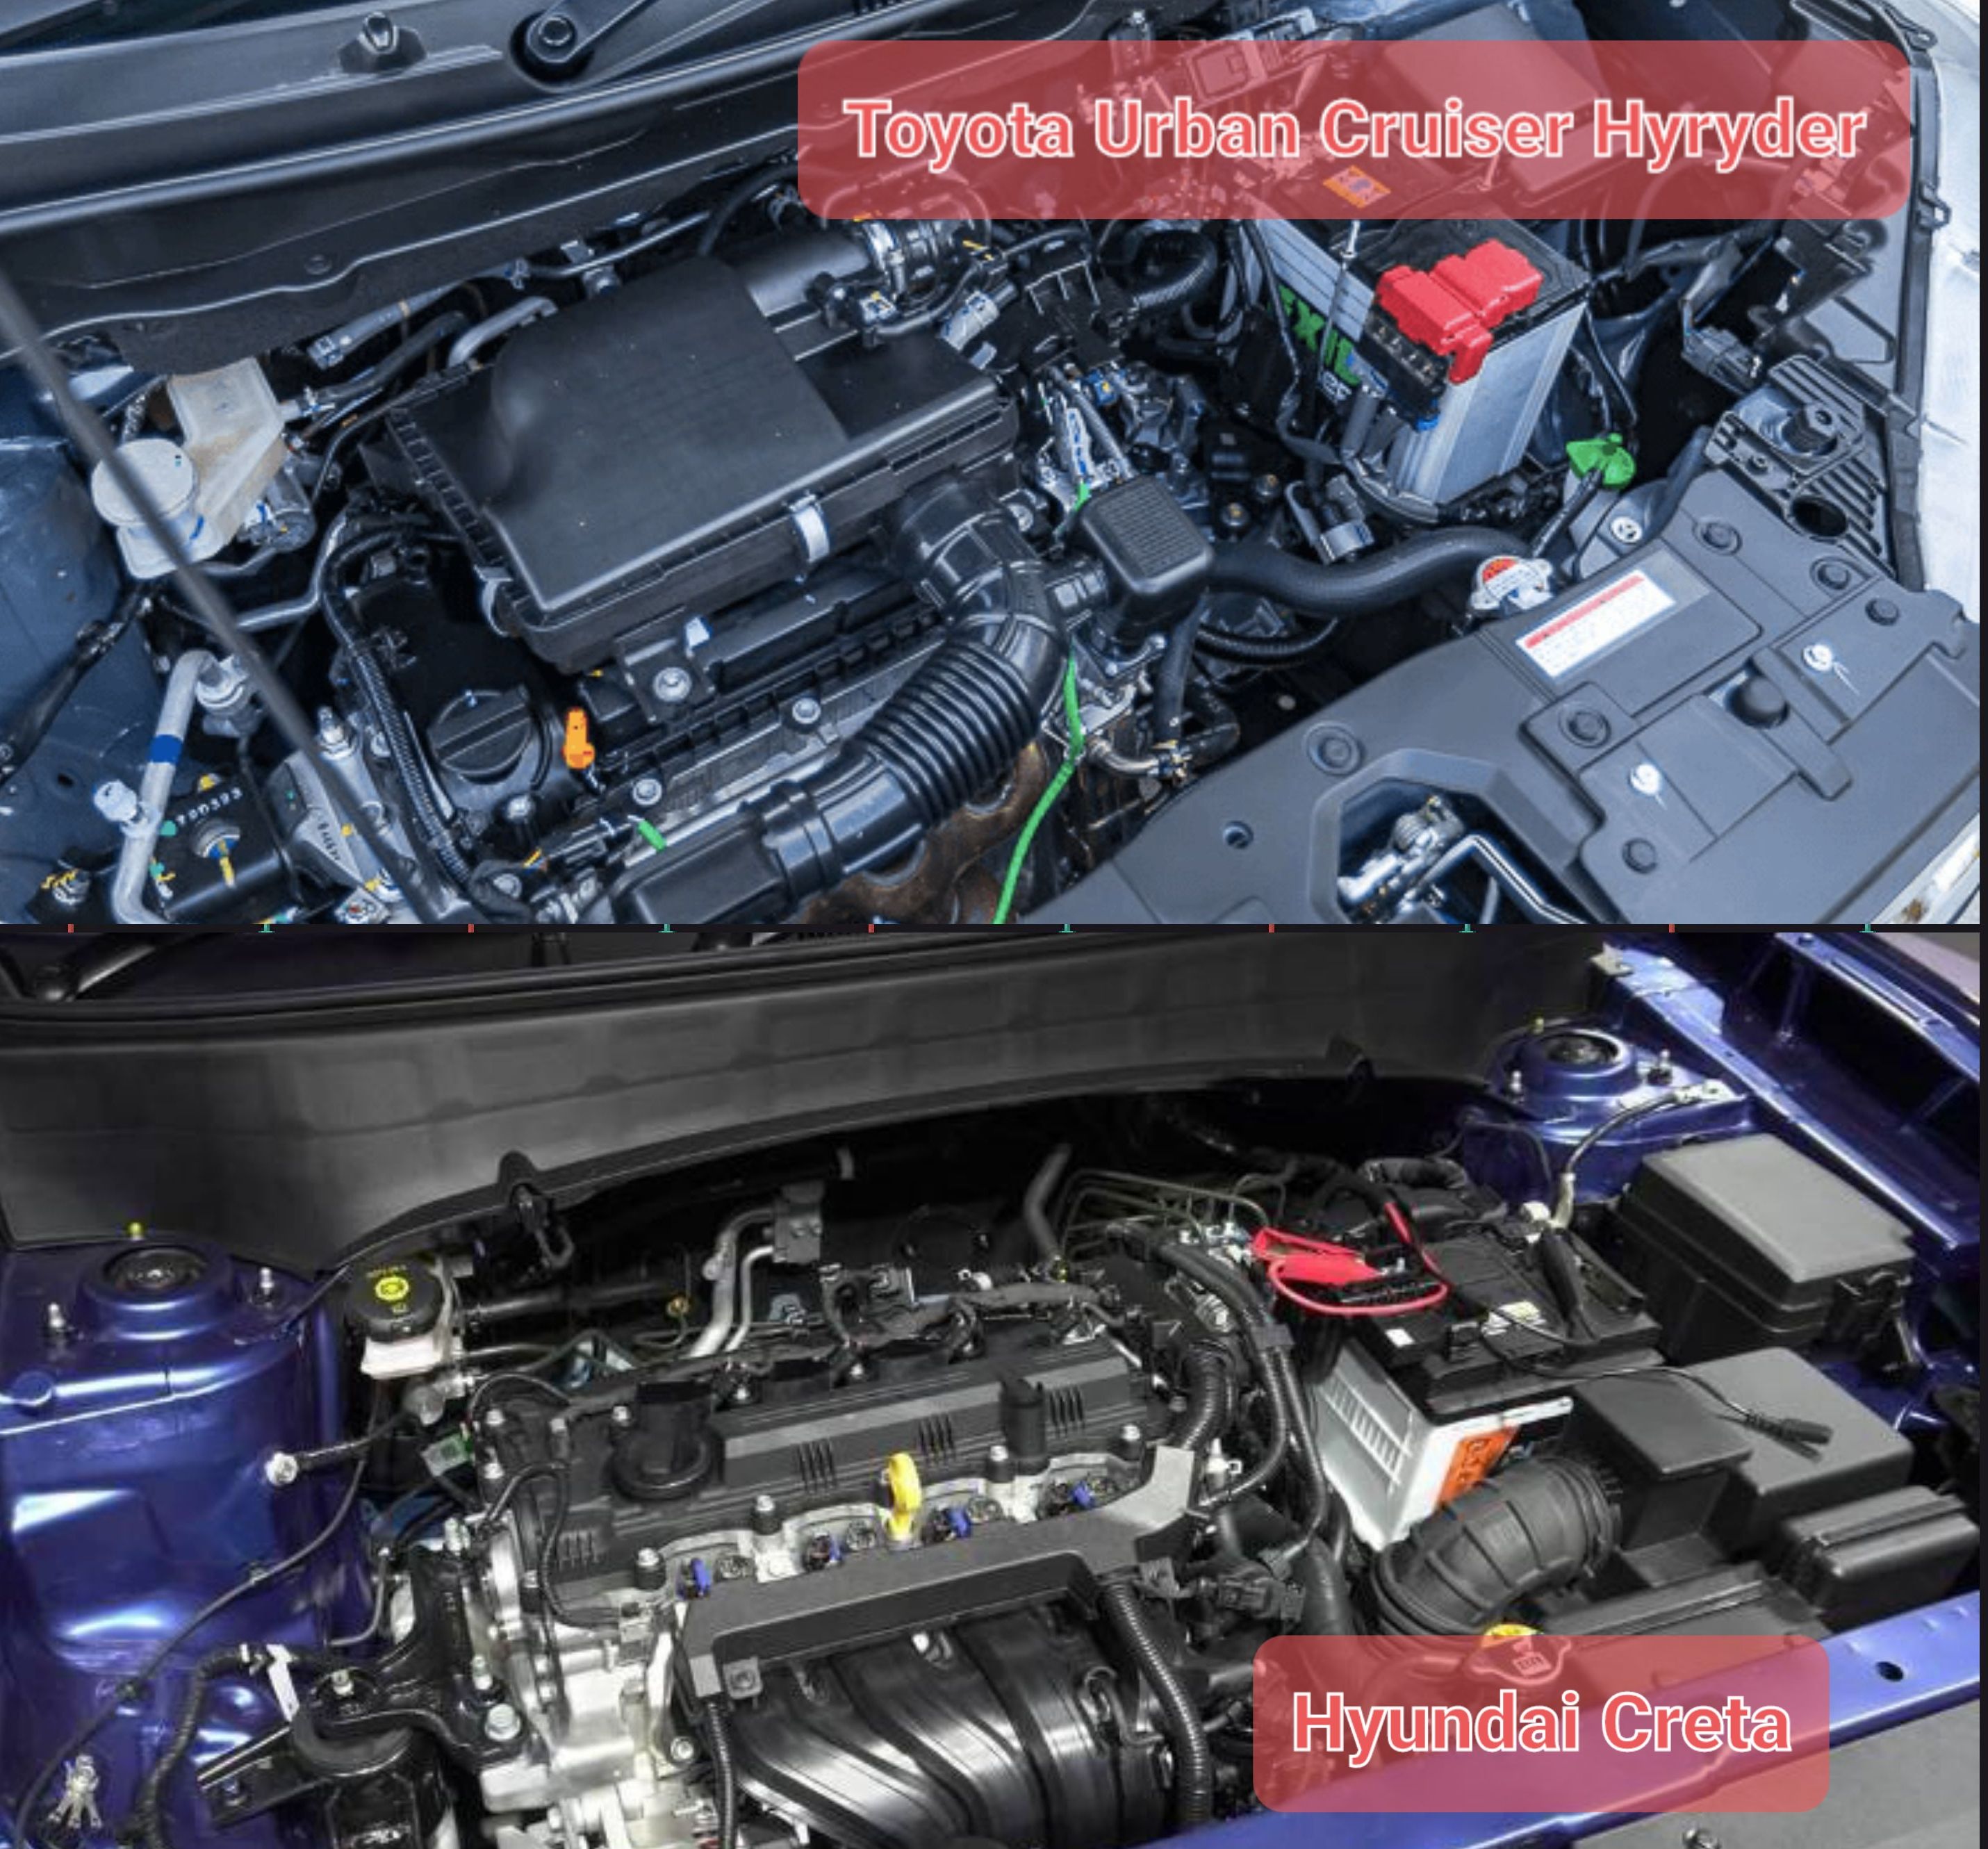 Mesin Toyota Urban Cruiser Hyryder dan Hyundai Creta